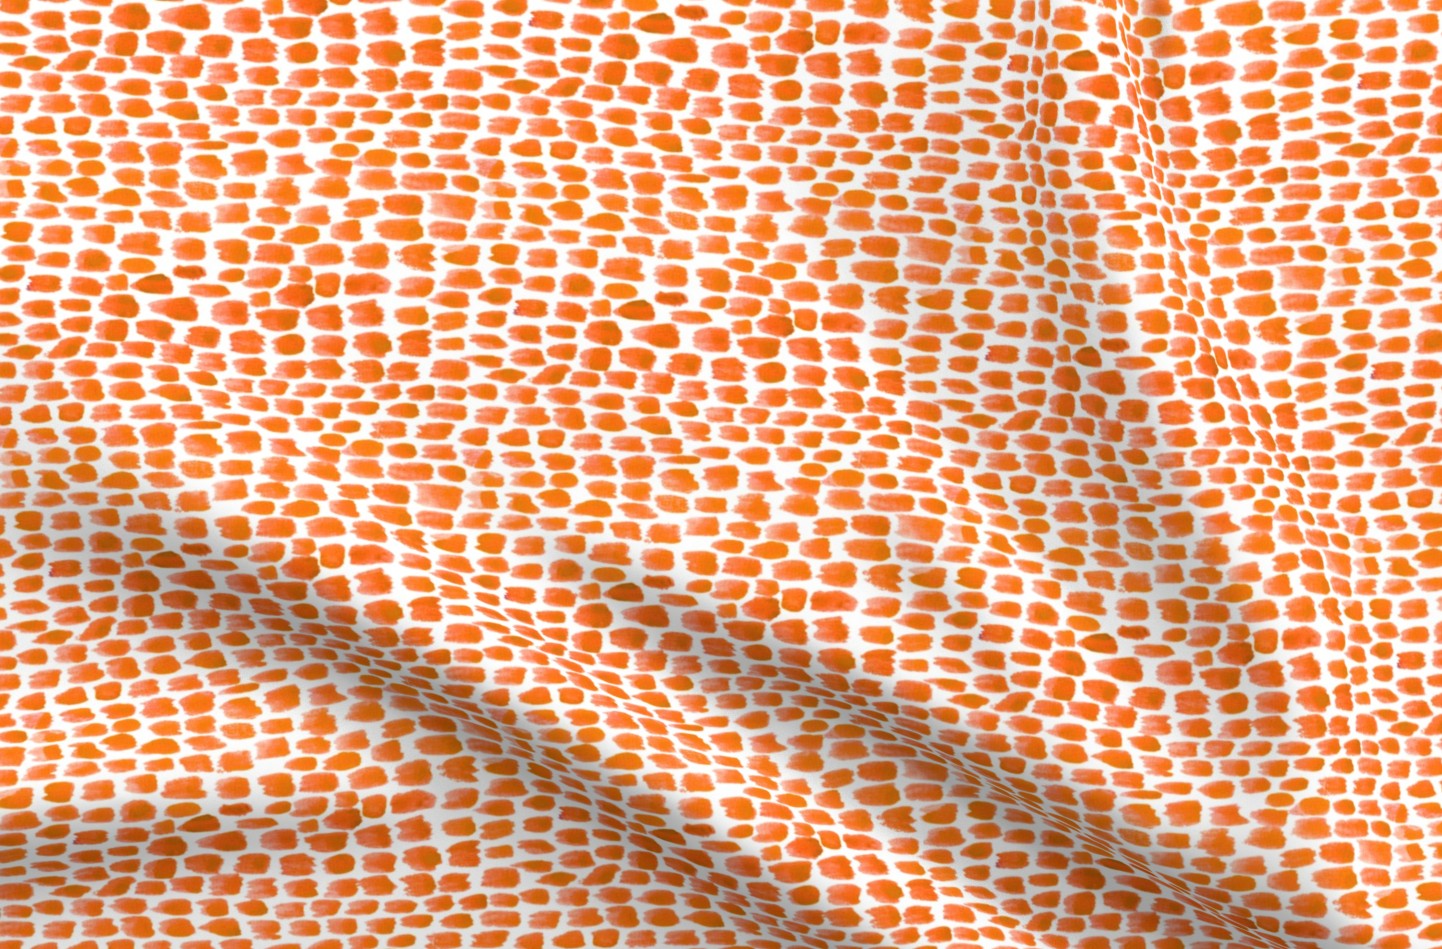 Alma Orange Printed Fabric by Studio Ten Design